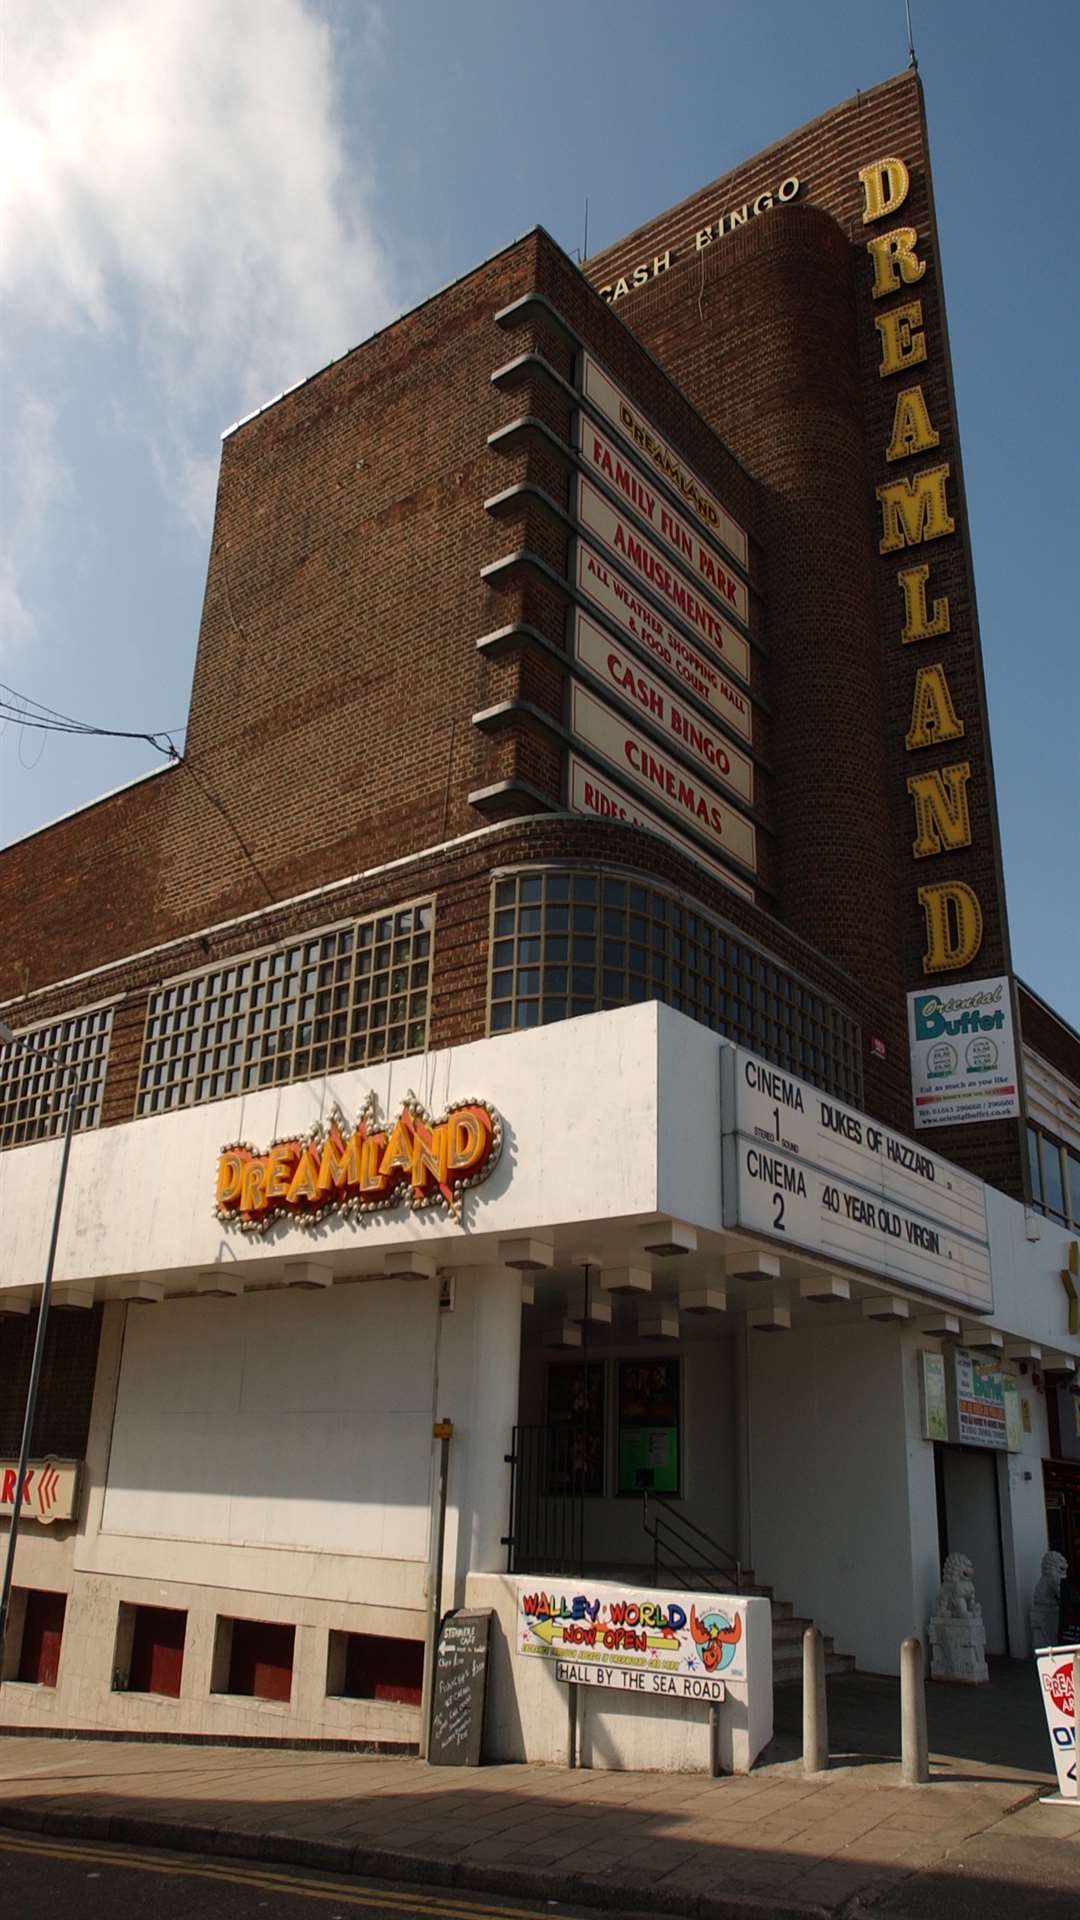 The Dreamland cinema building